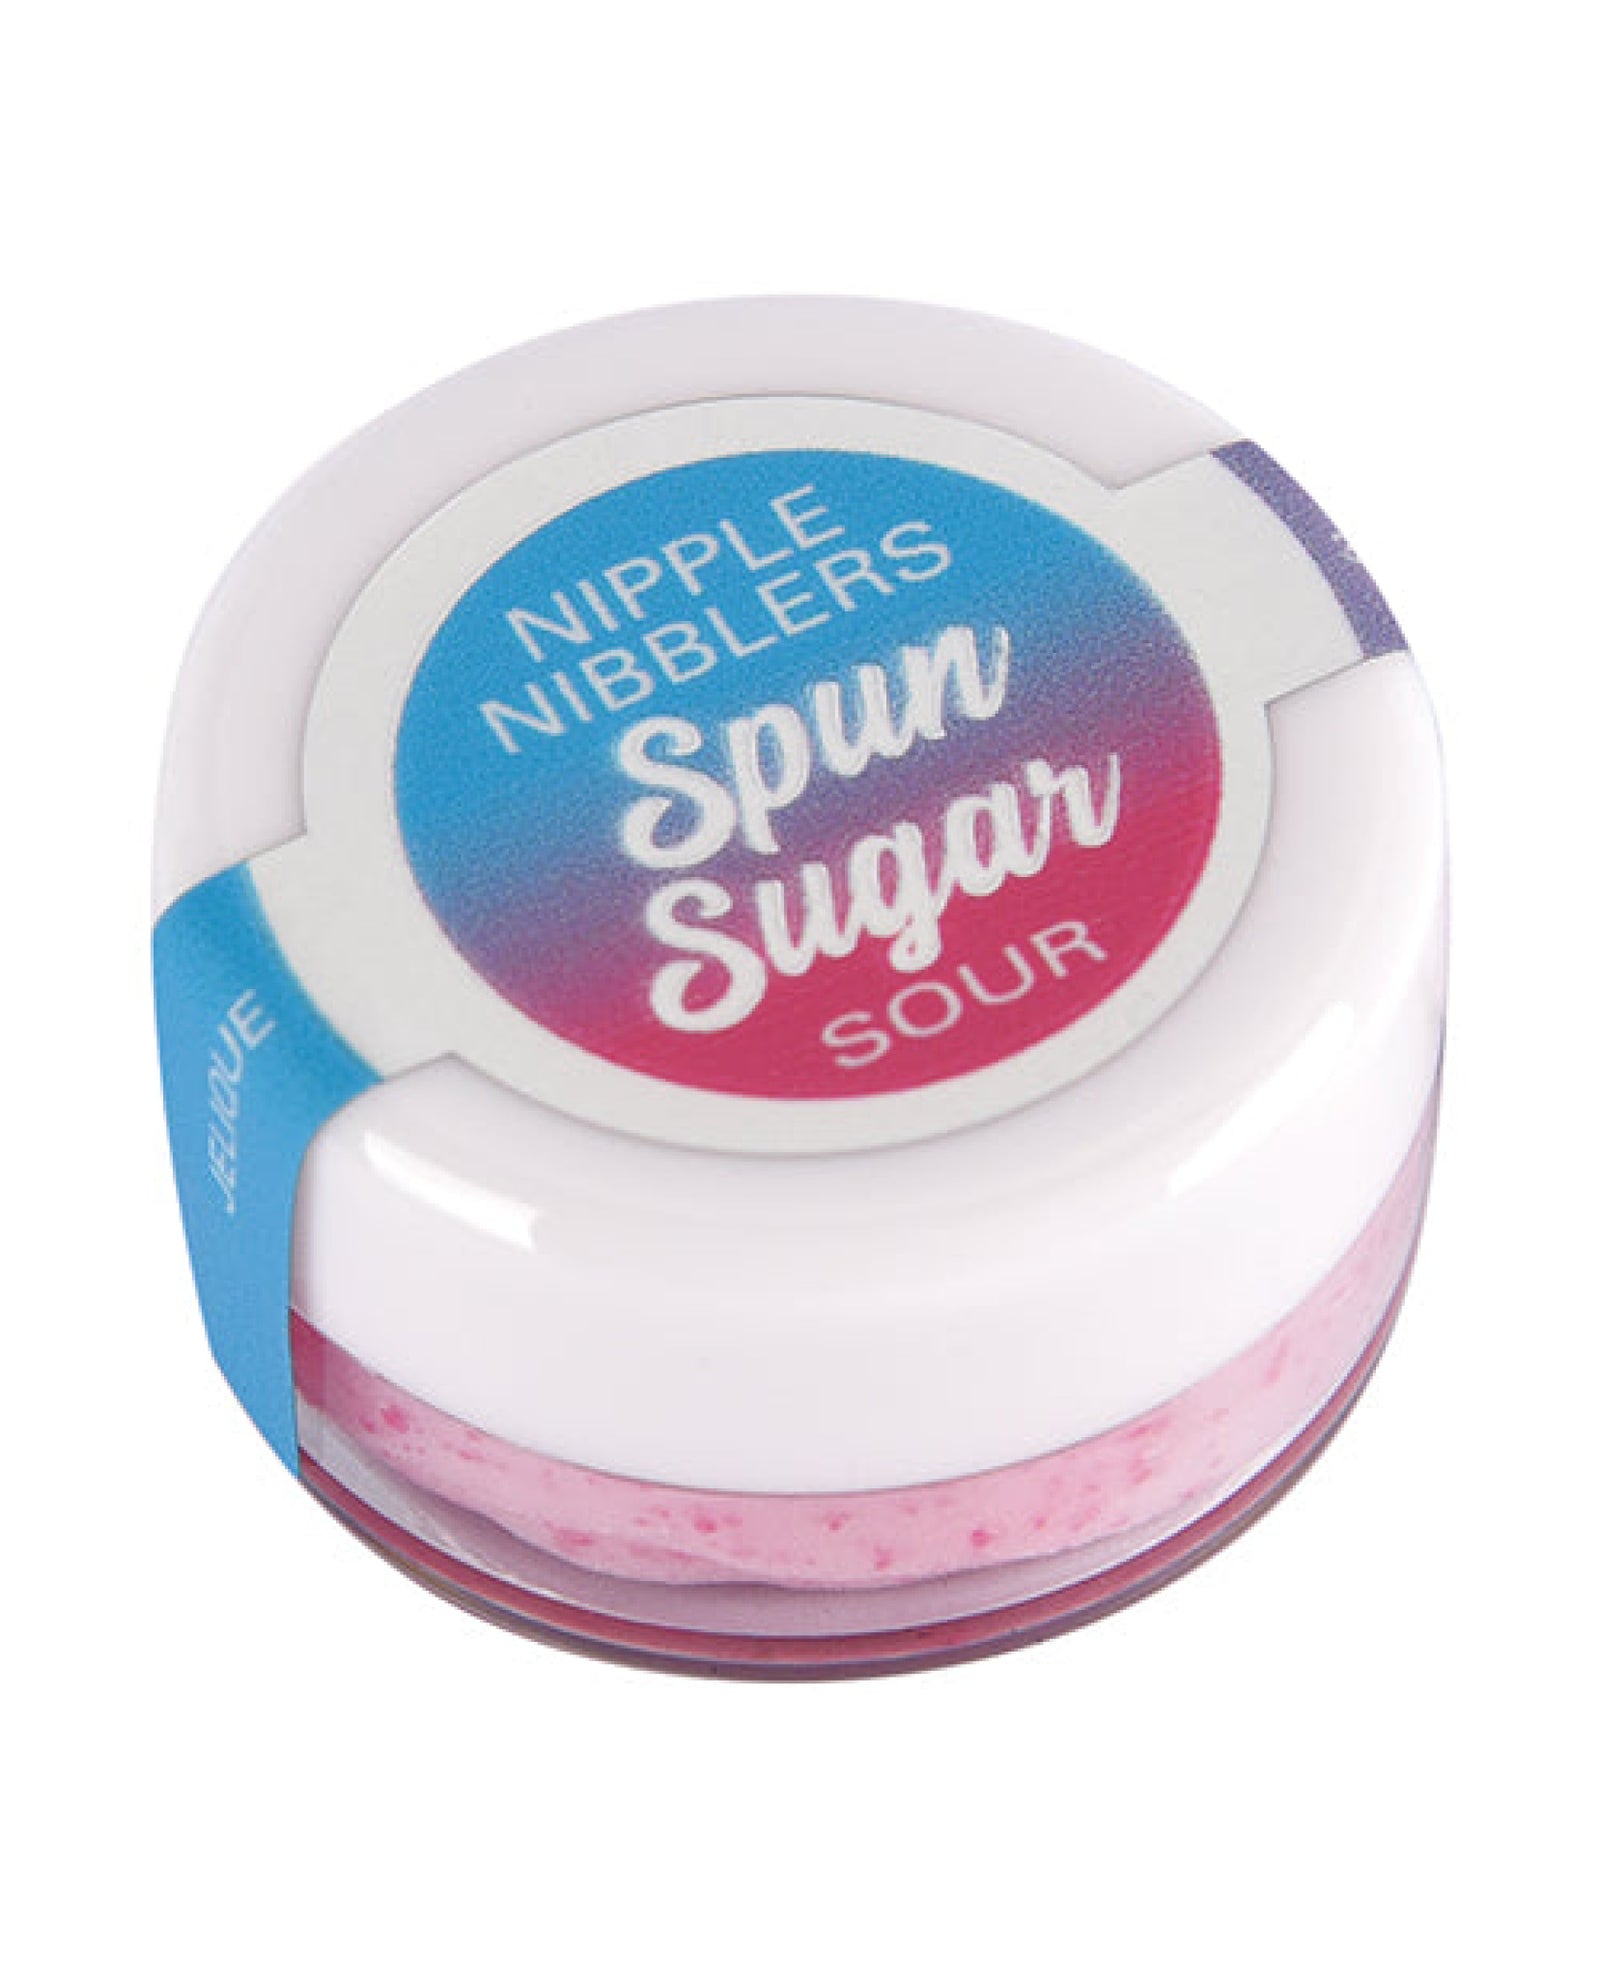 Nipple Nibbler Sour Tingle Balm Classic Brands